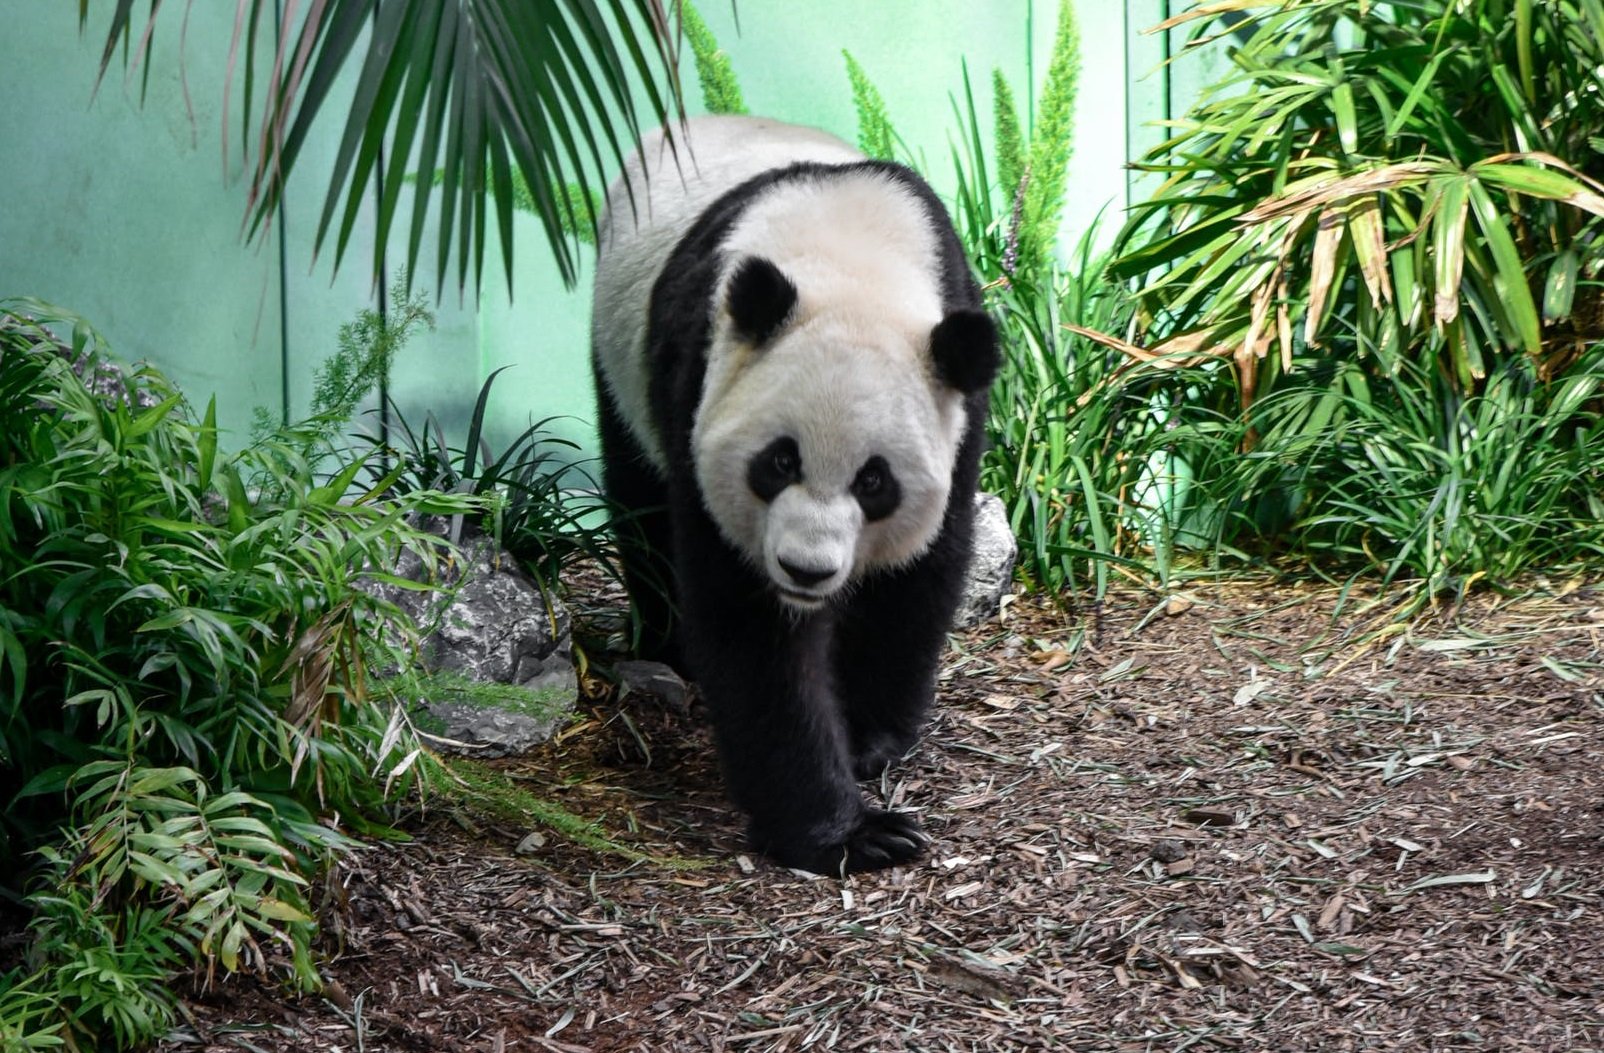 Oso panda gigante caminando cerca de plantas verdes. | Foto: Pexels